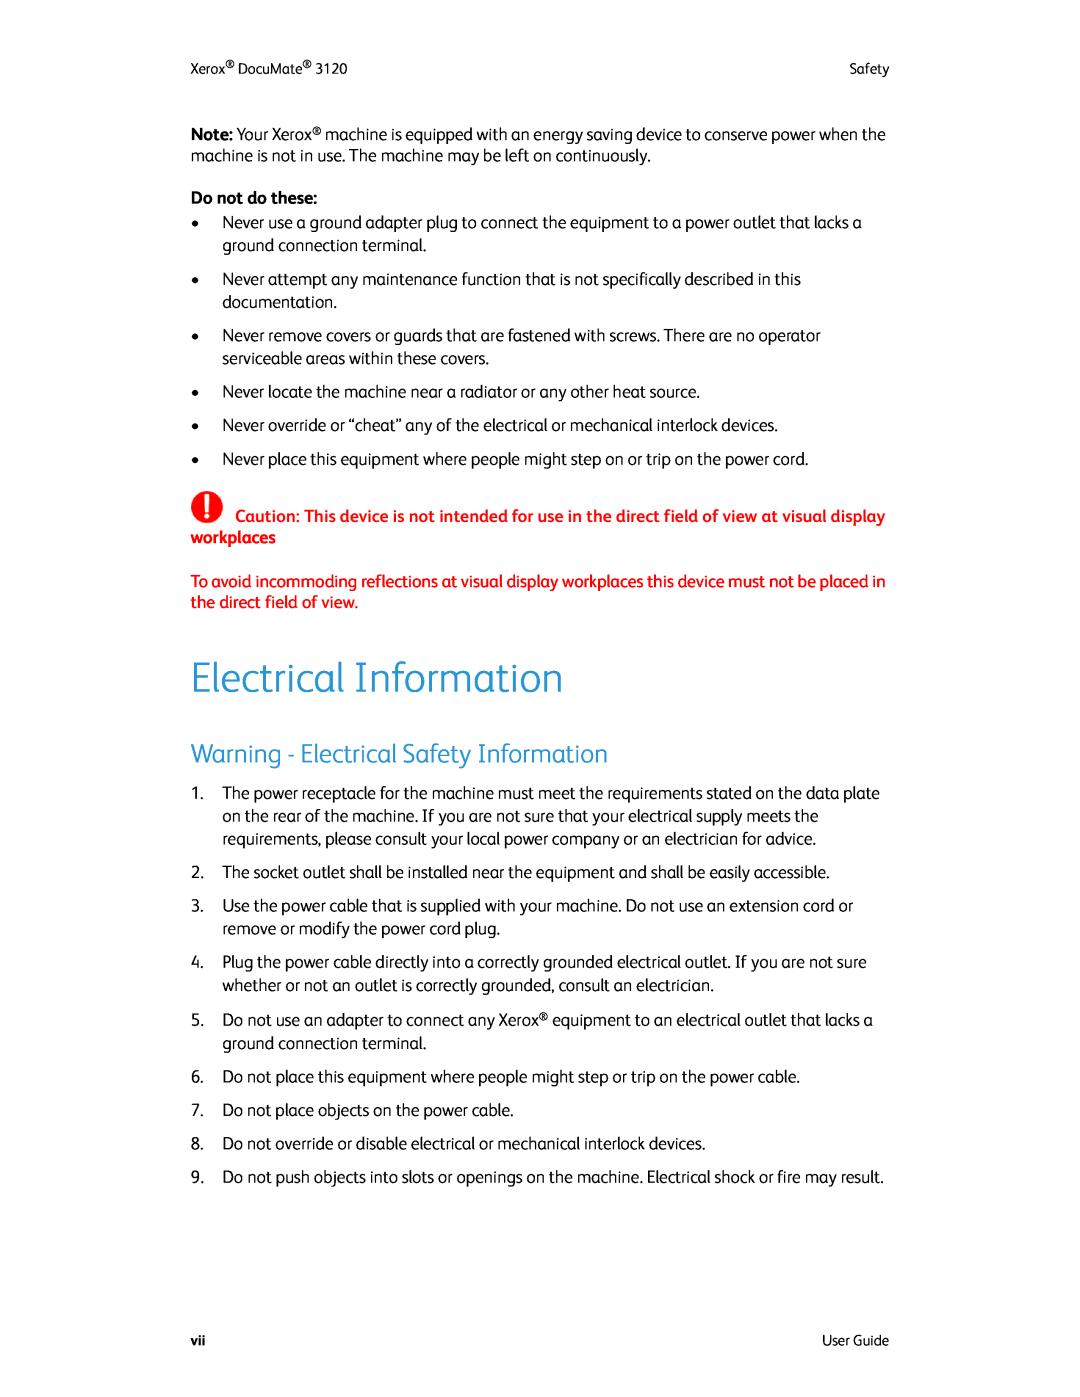 Xerox xerox manual Electrical Information, Warning - Electrical Safety Information 